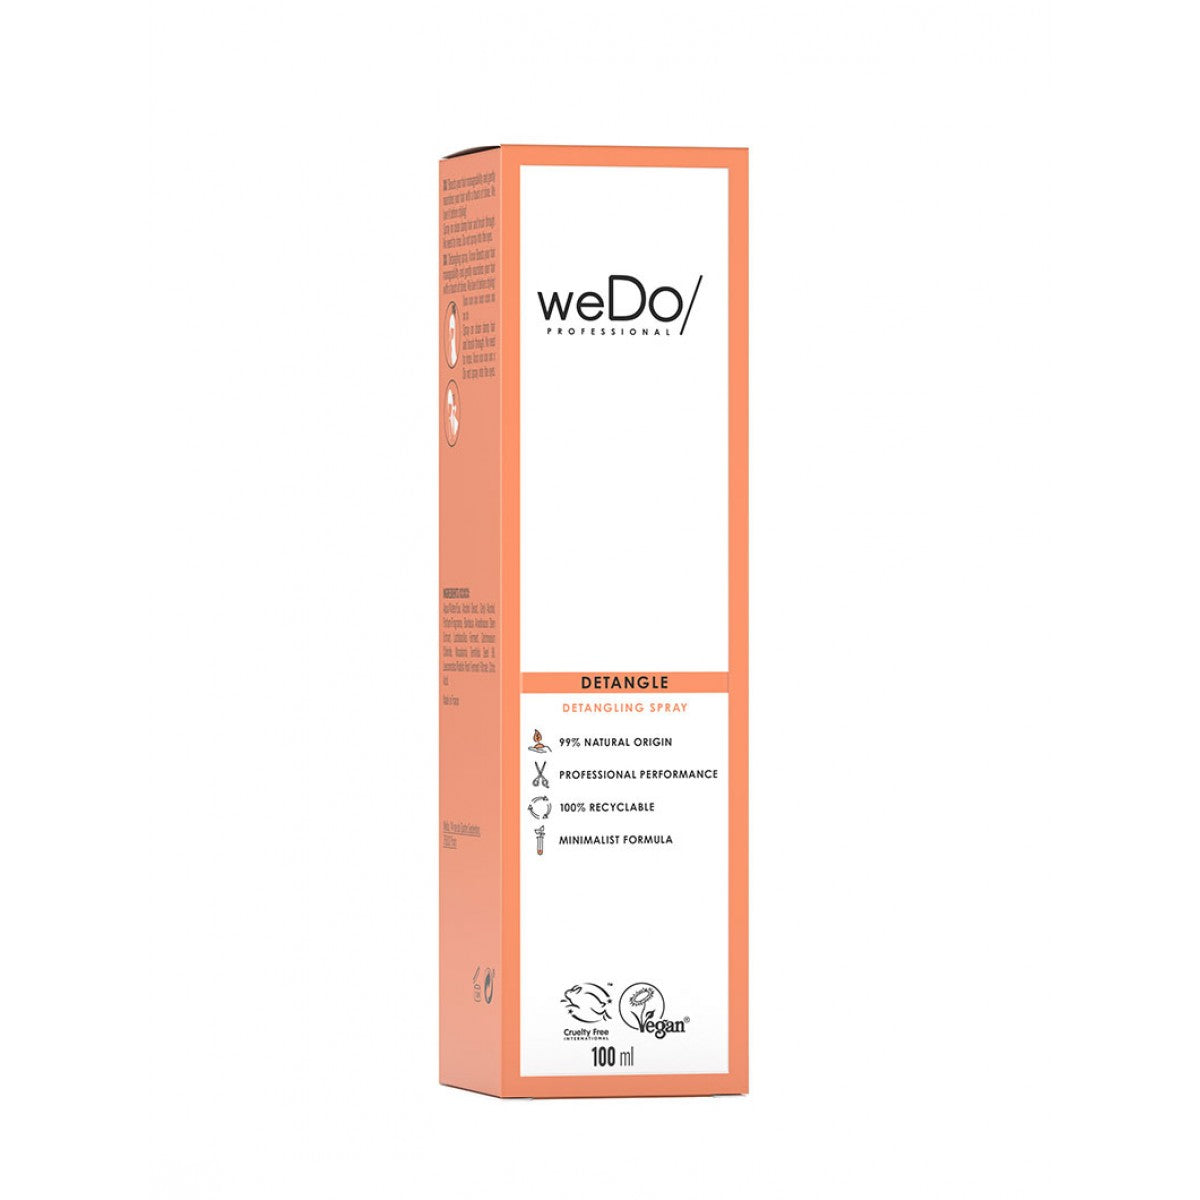 WeDo/Professional Detangling Spray